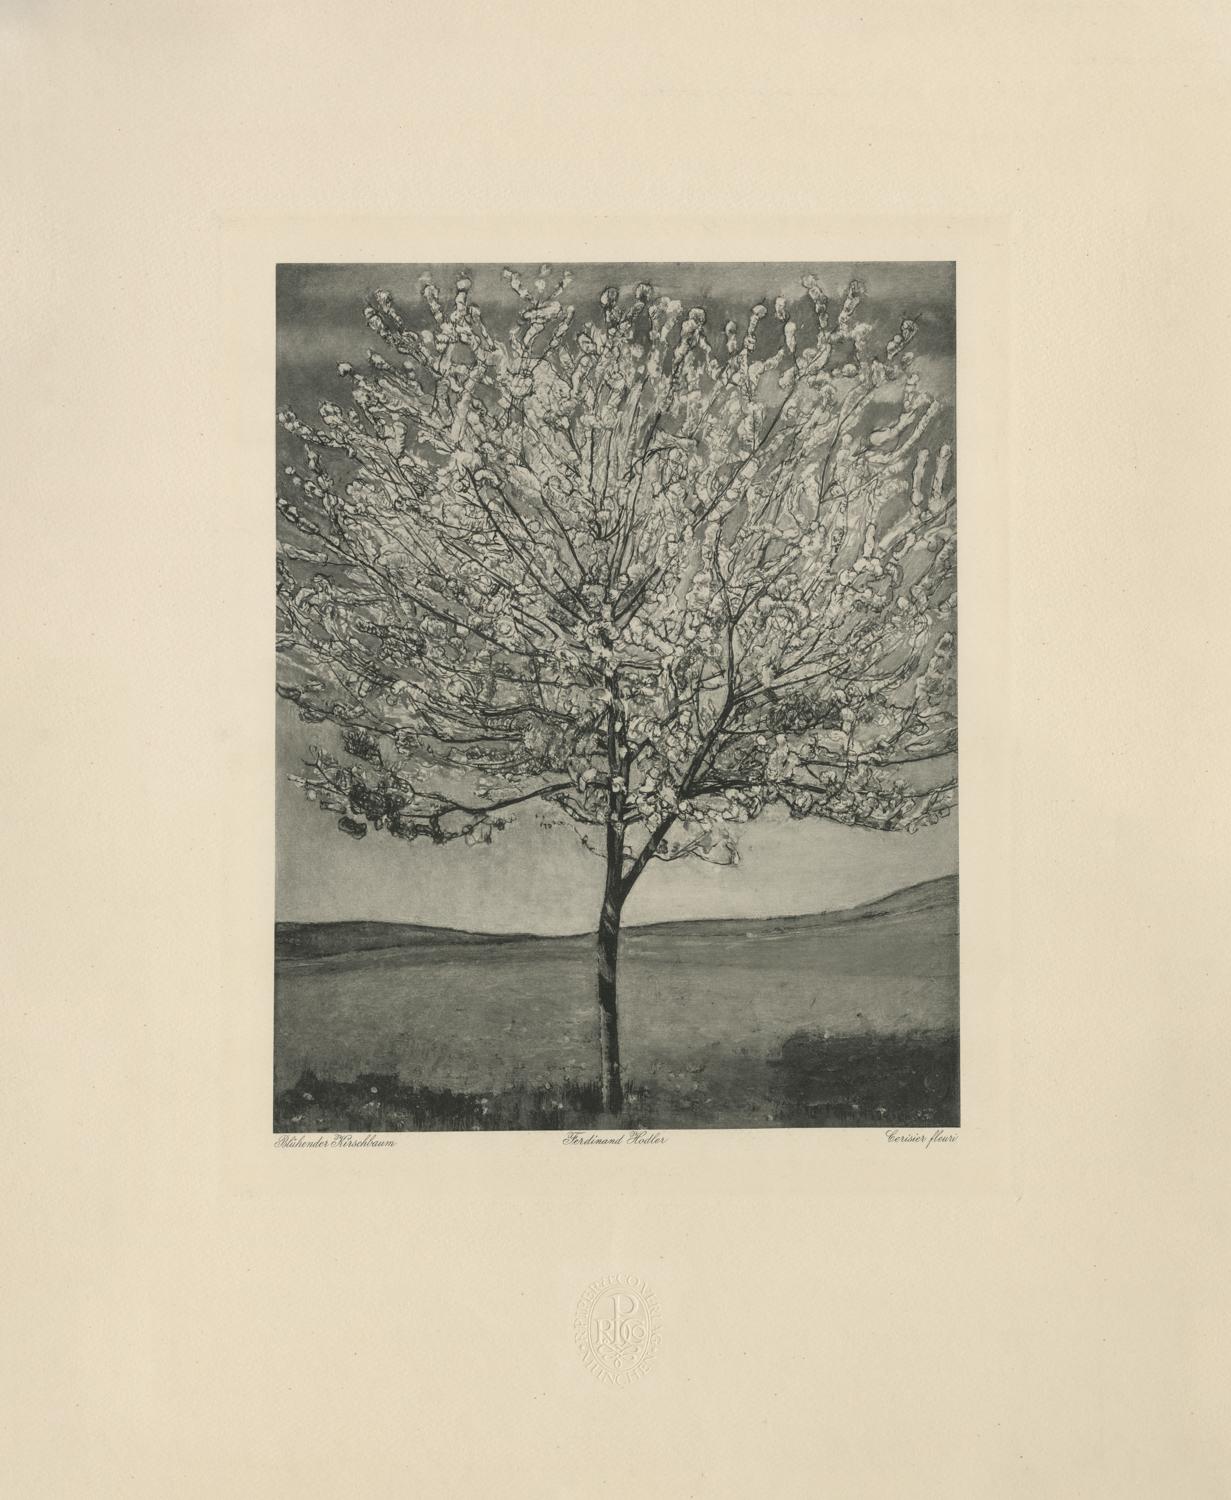 Ferdinand Hodler & R. Piper & Co. Figurative Print - "Cherry Tree in Bloom" Copper Plate Heliogravure